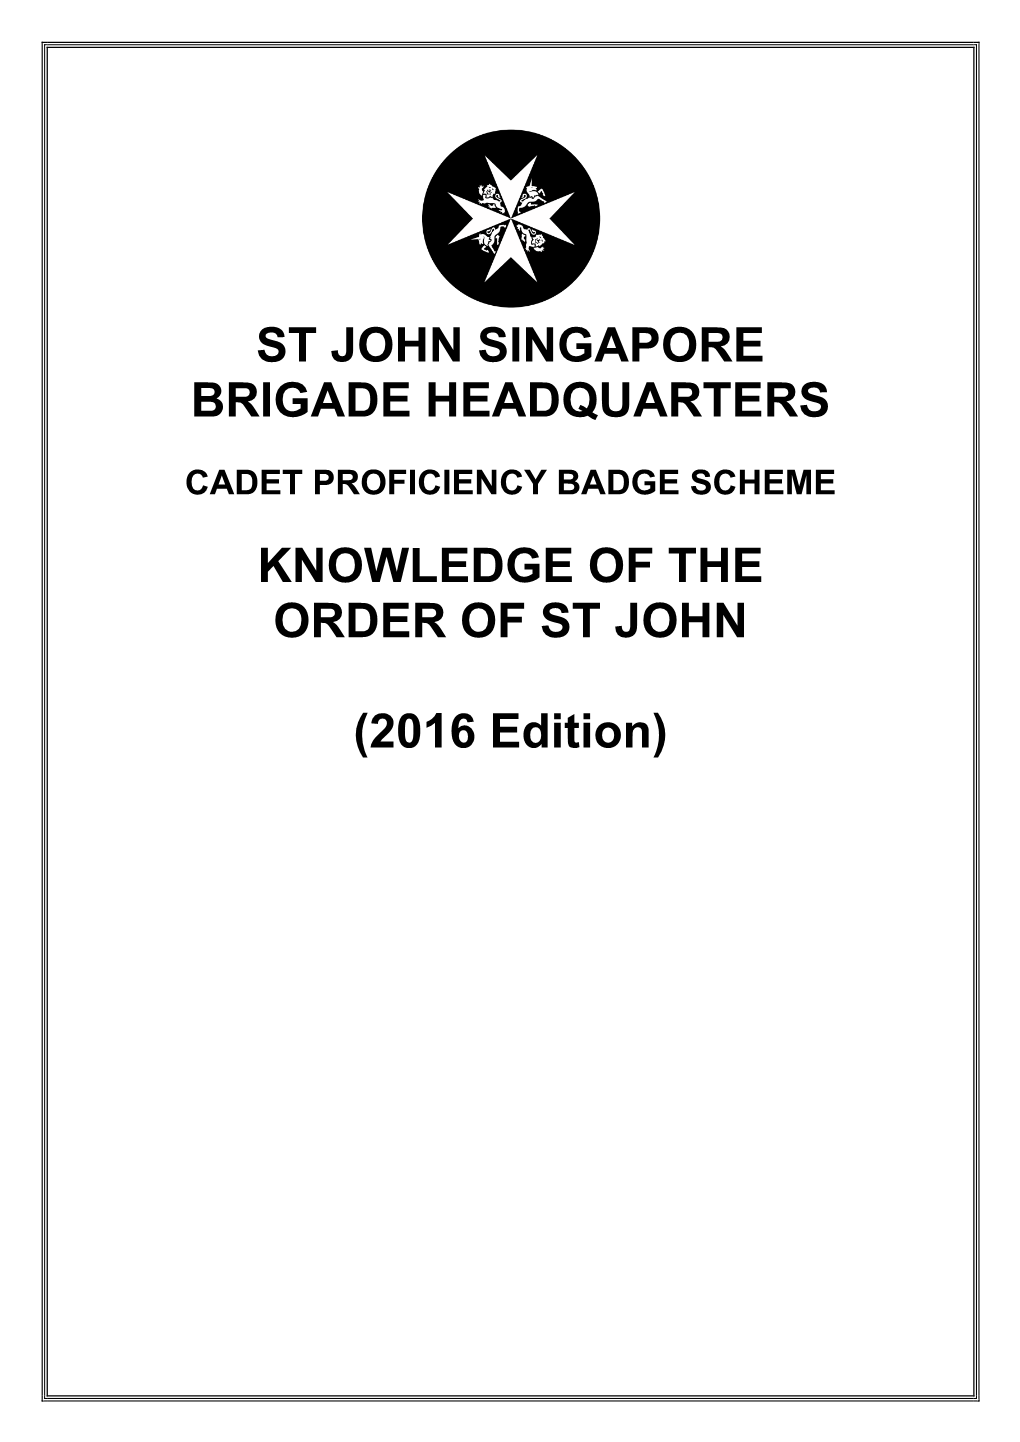 ST JOHN SINGAPORE BRIGADE HEADQUARTERS KNOWLEDGE of the ORDER of ST JOHN (2016 Edition)